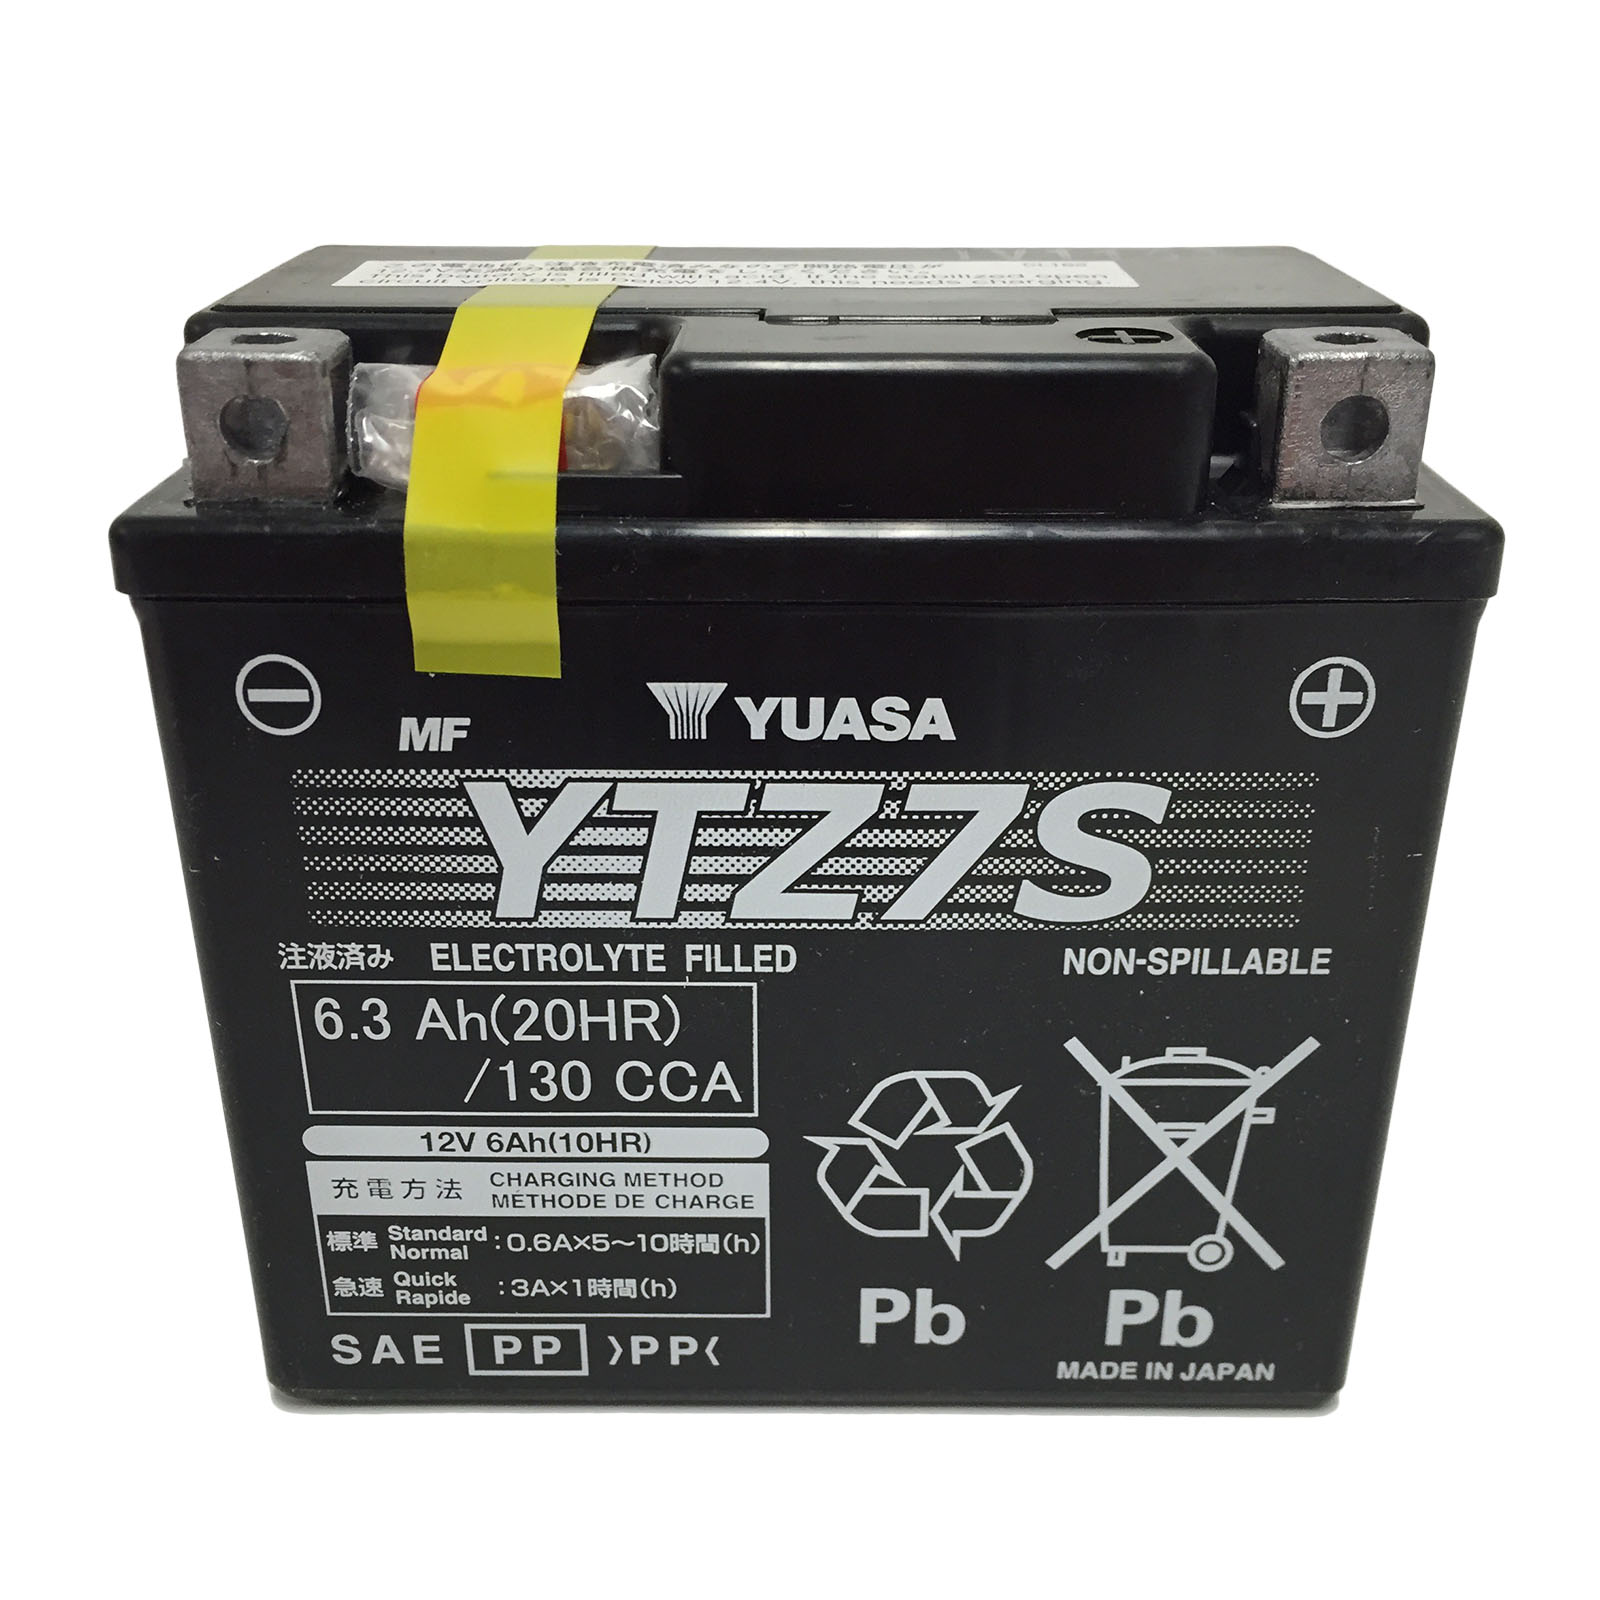 Yuasa YTZ7S 12V Motorcycle Battery at MXstore